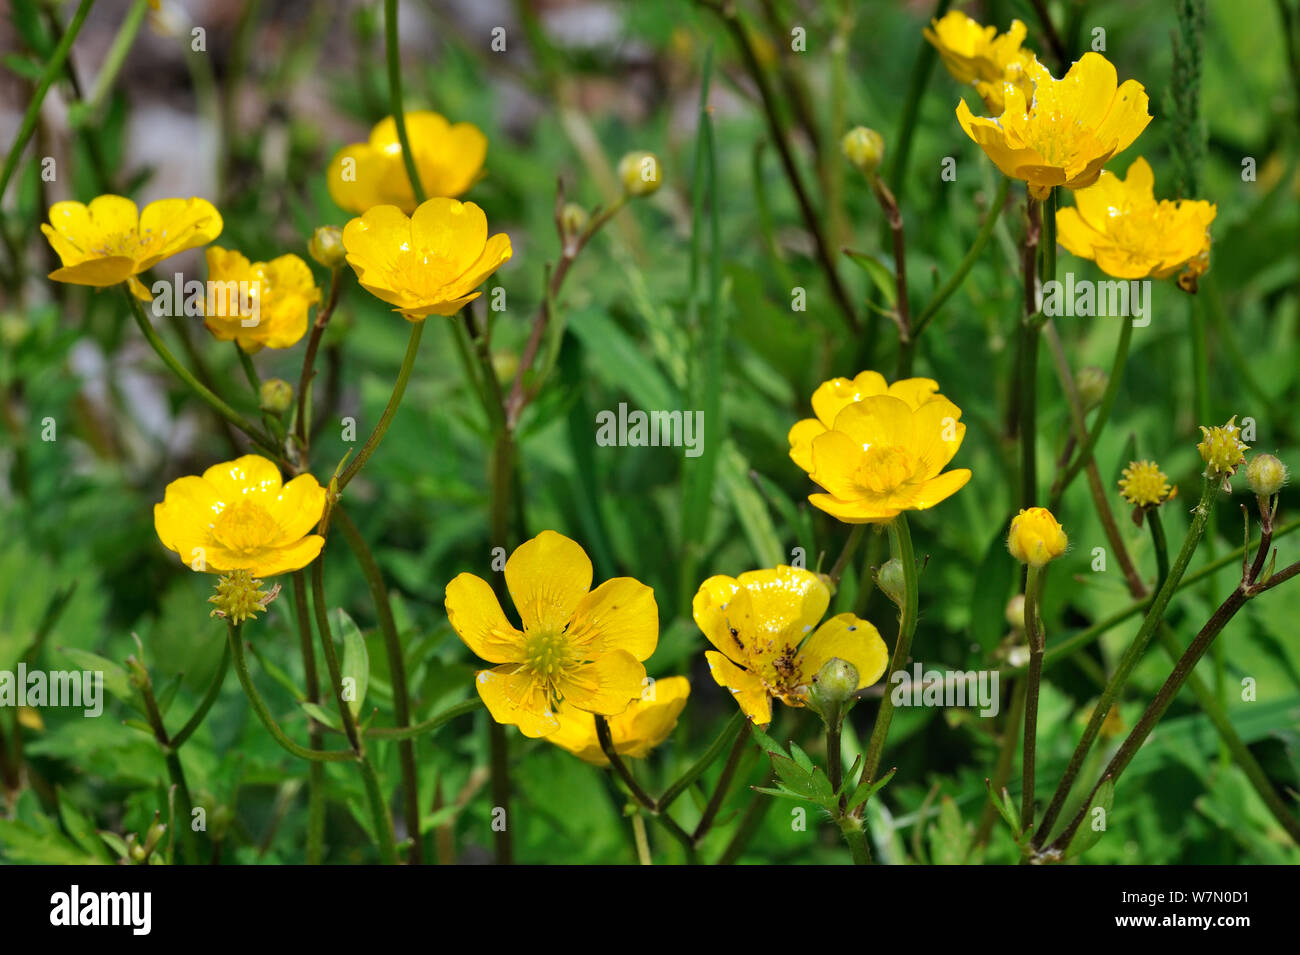 Creeping buttercup / Creeping crowsfoot (Ranunculus repens) in flower, Belgium Stock Photo